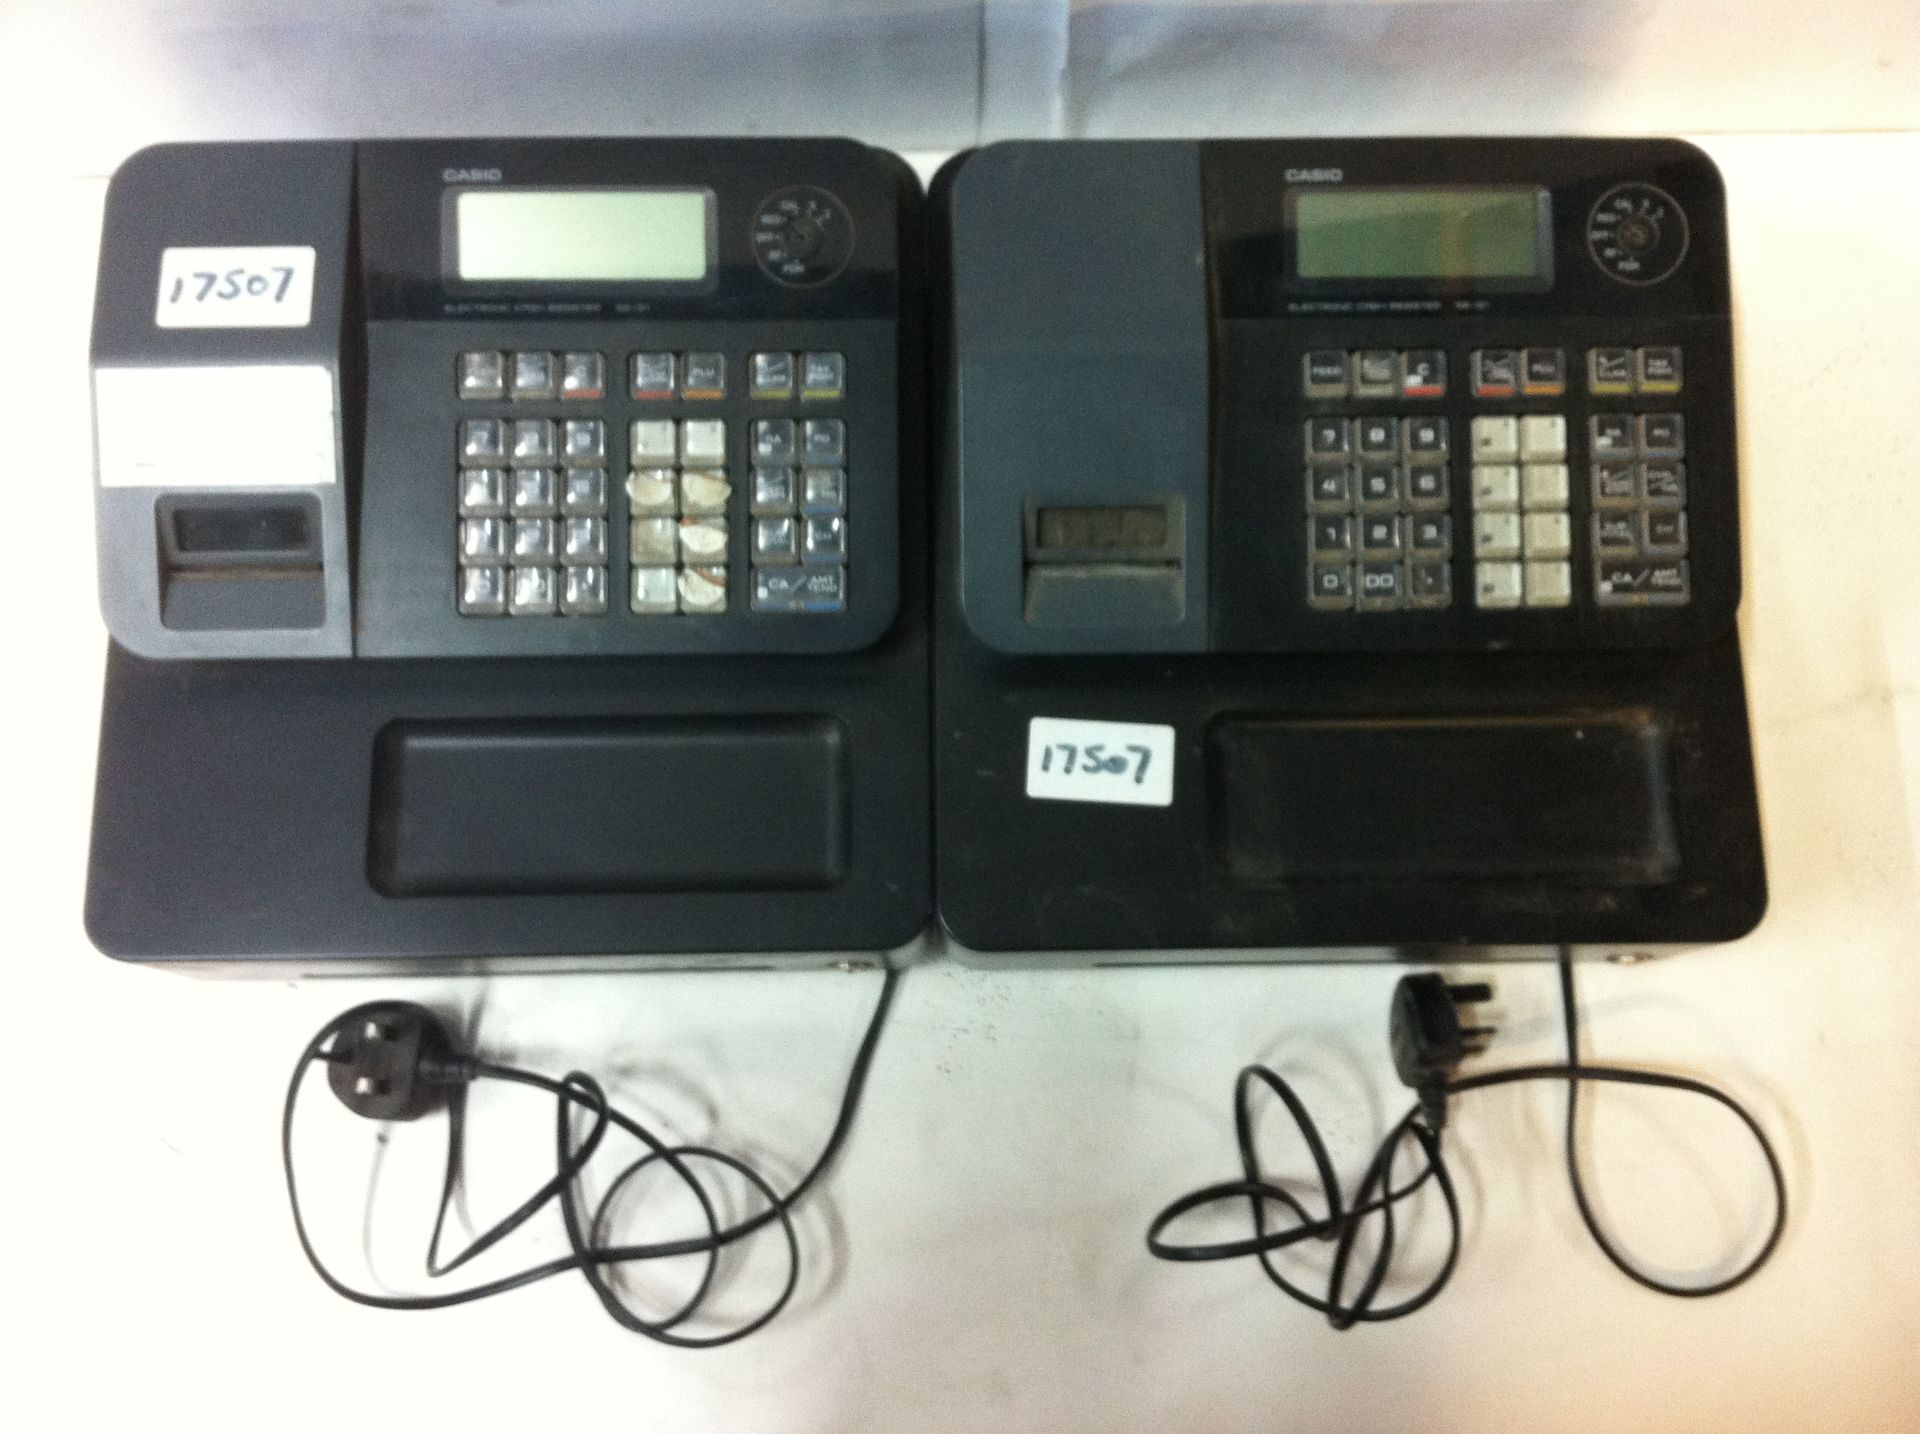 2 x Casio electronic cash registers